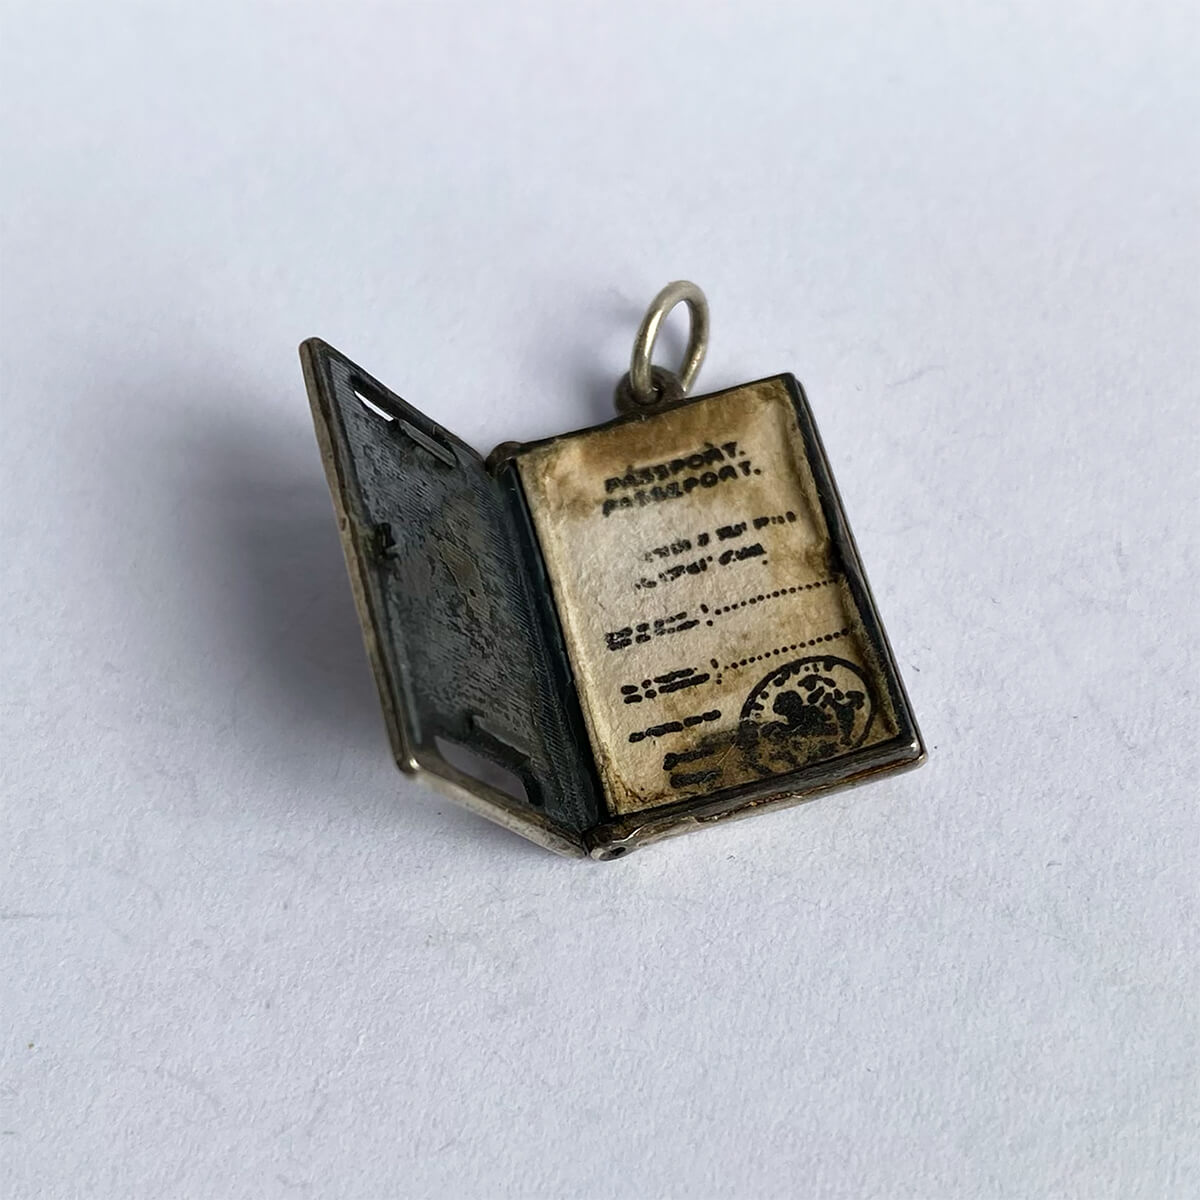 Vintage silver British Passport pendant opens to paper